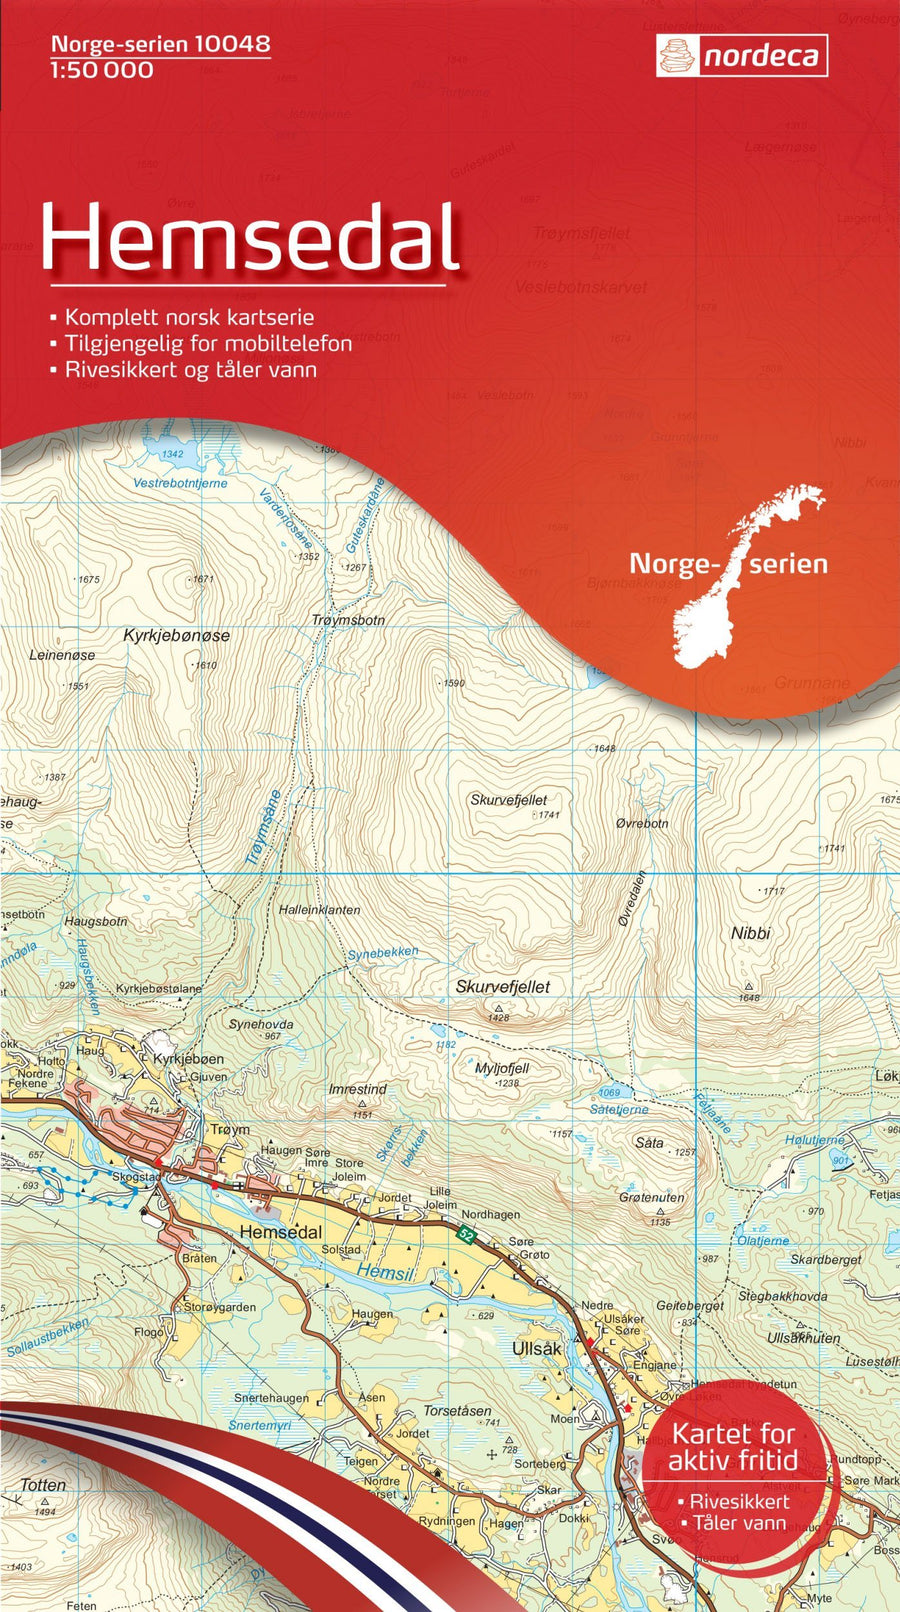 Carte de randonnée n° 10048 - Hemsedal (Norvège) | Nordeca - Norge-serien carte pliée Nordeca 